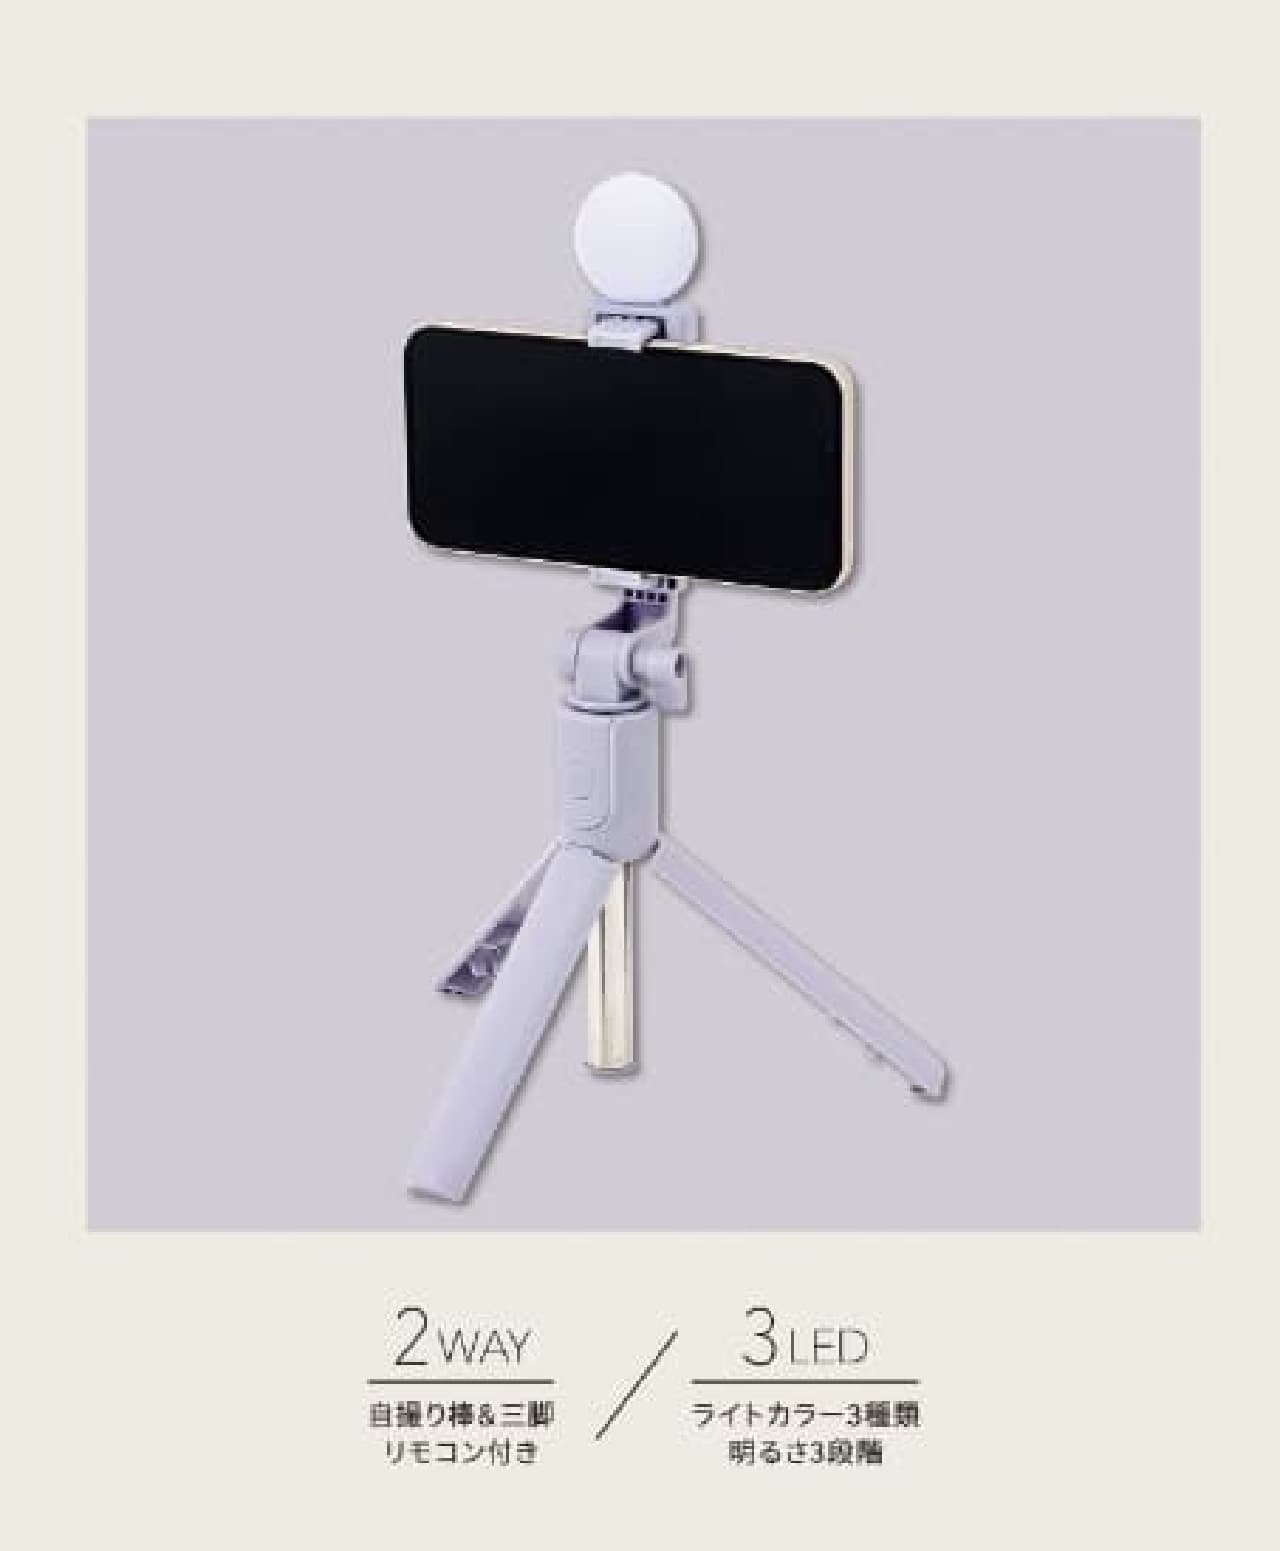 LED tripod selfie stick image